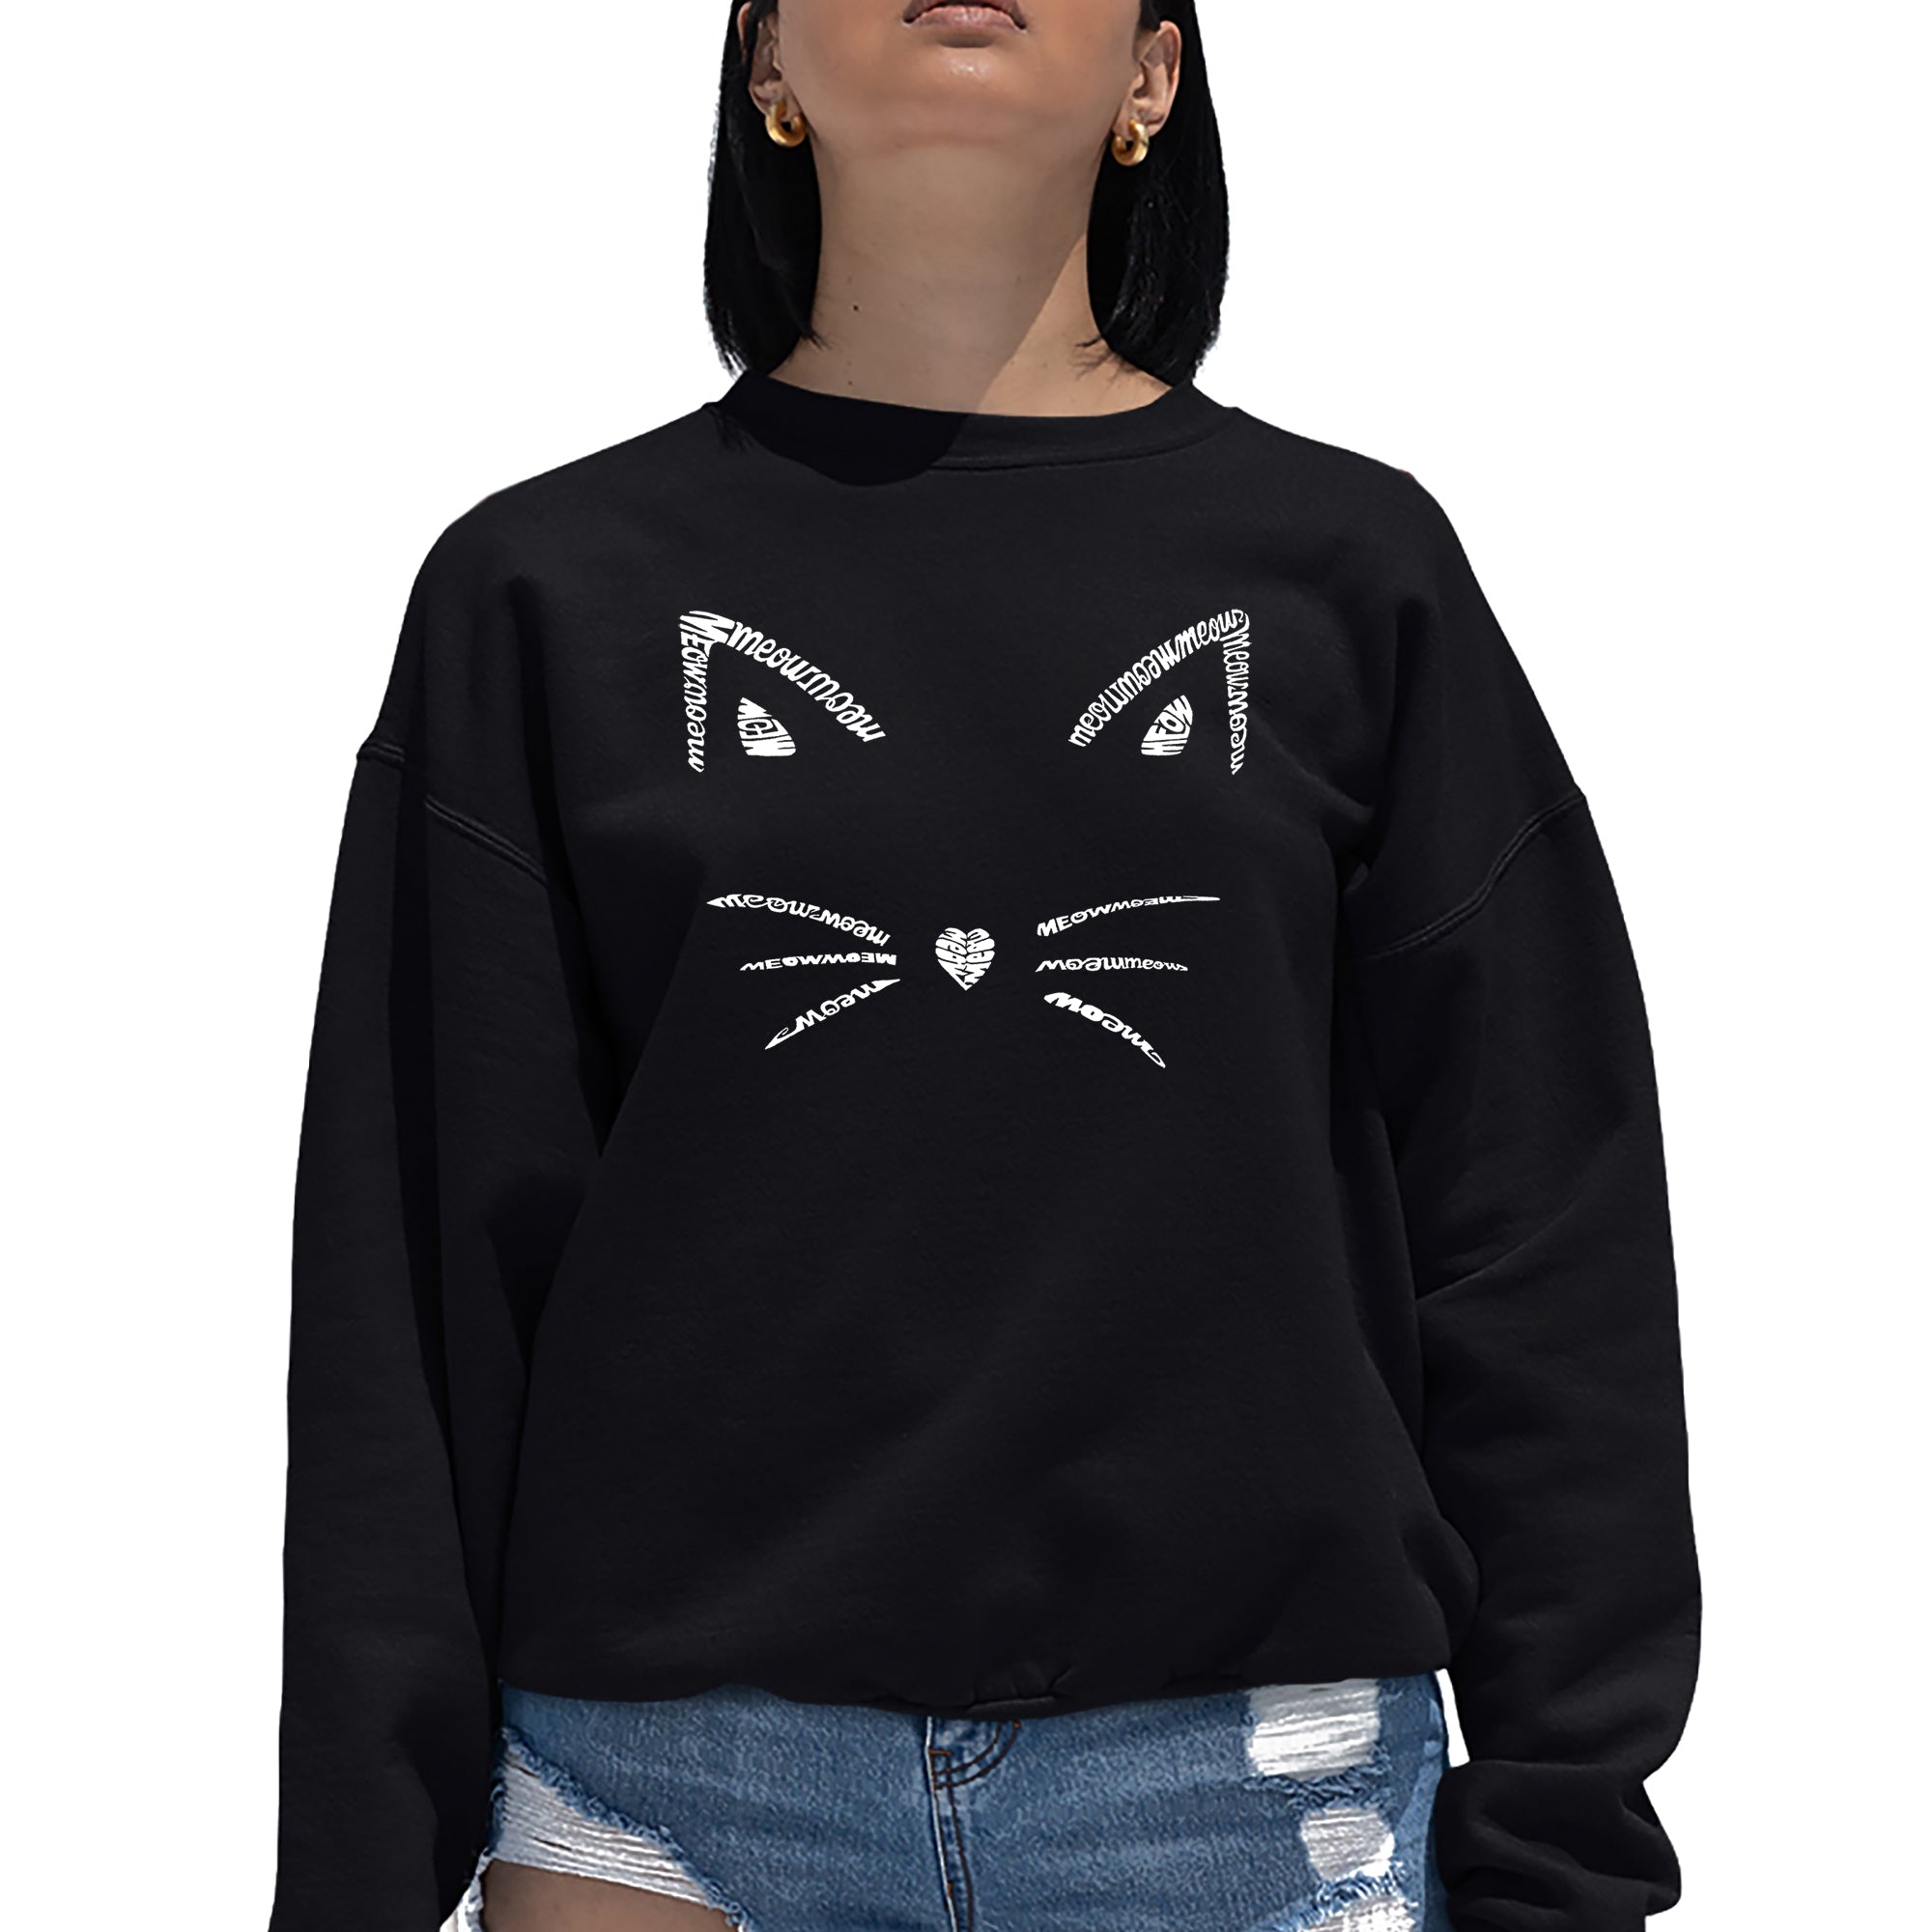 Whiskers - Women's Word Art Crewneck Sweatshirt - Black - XX-Large